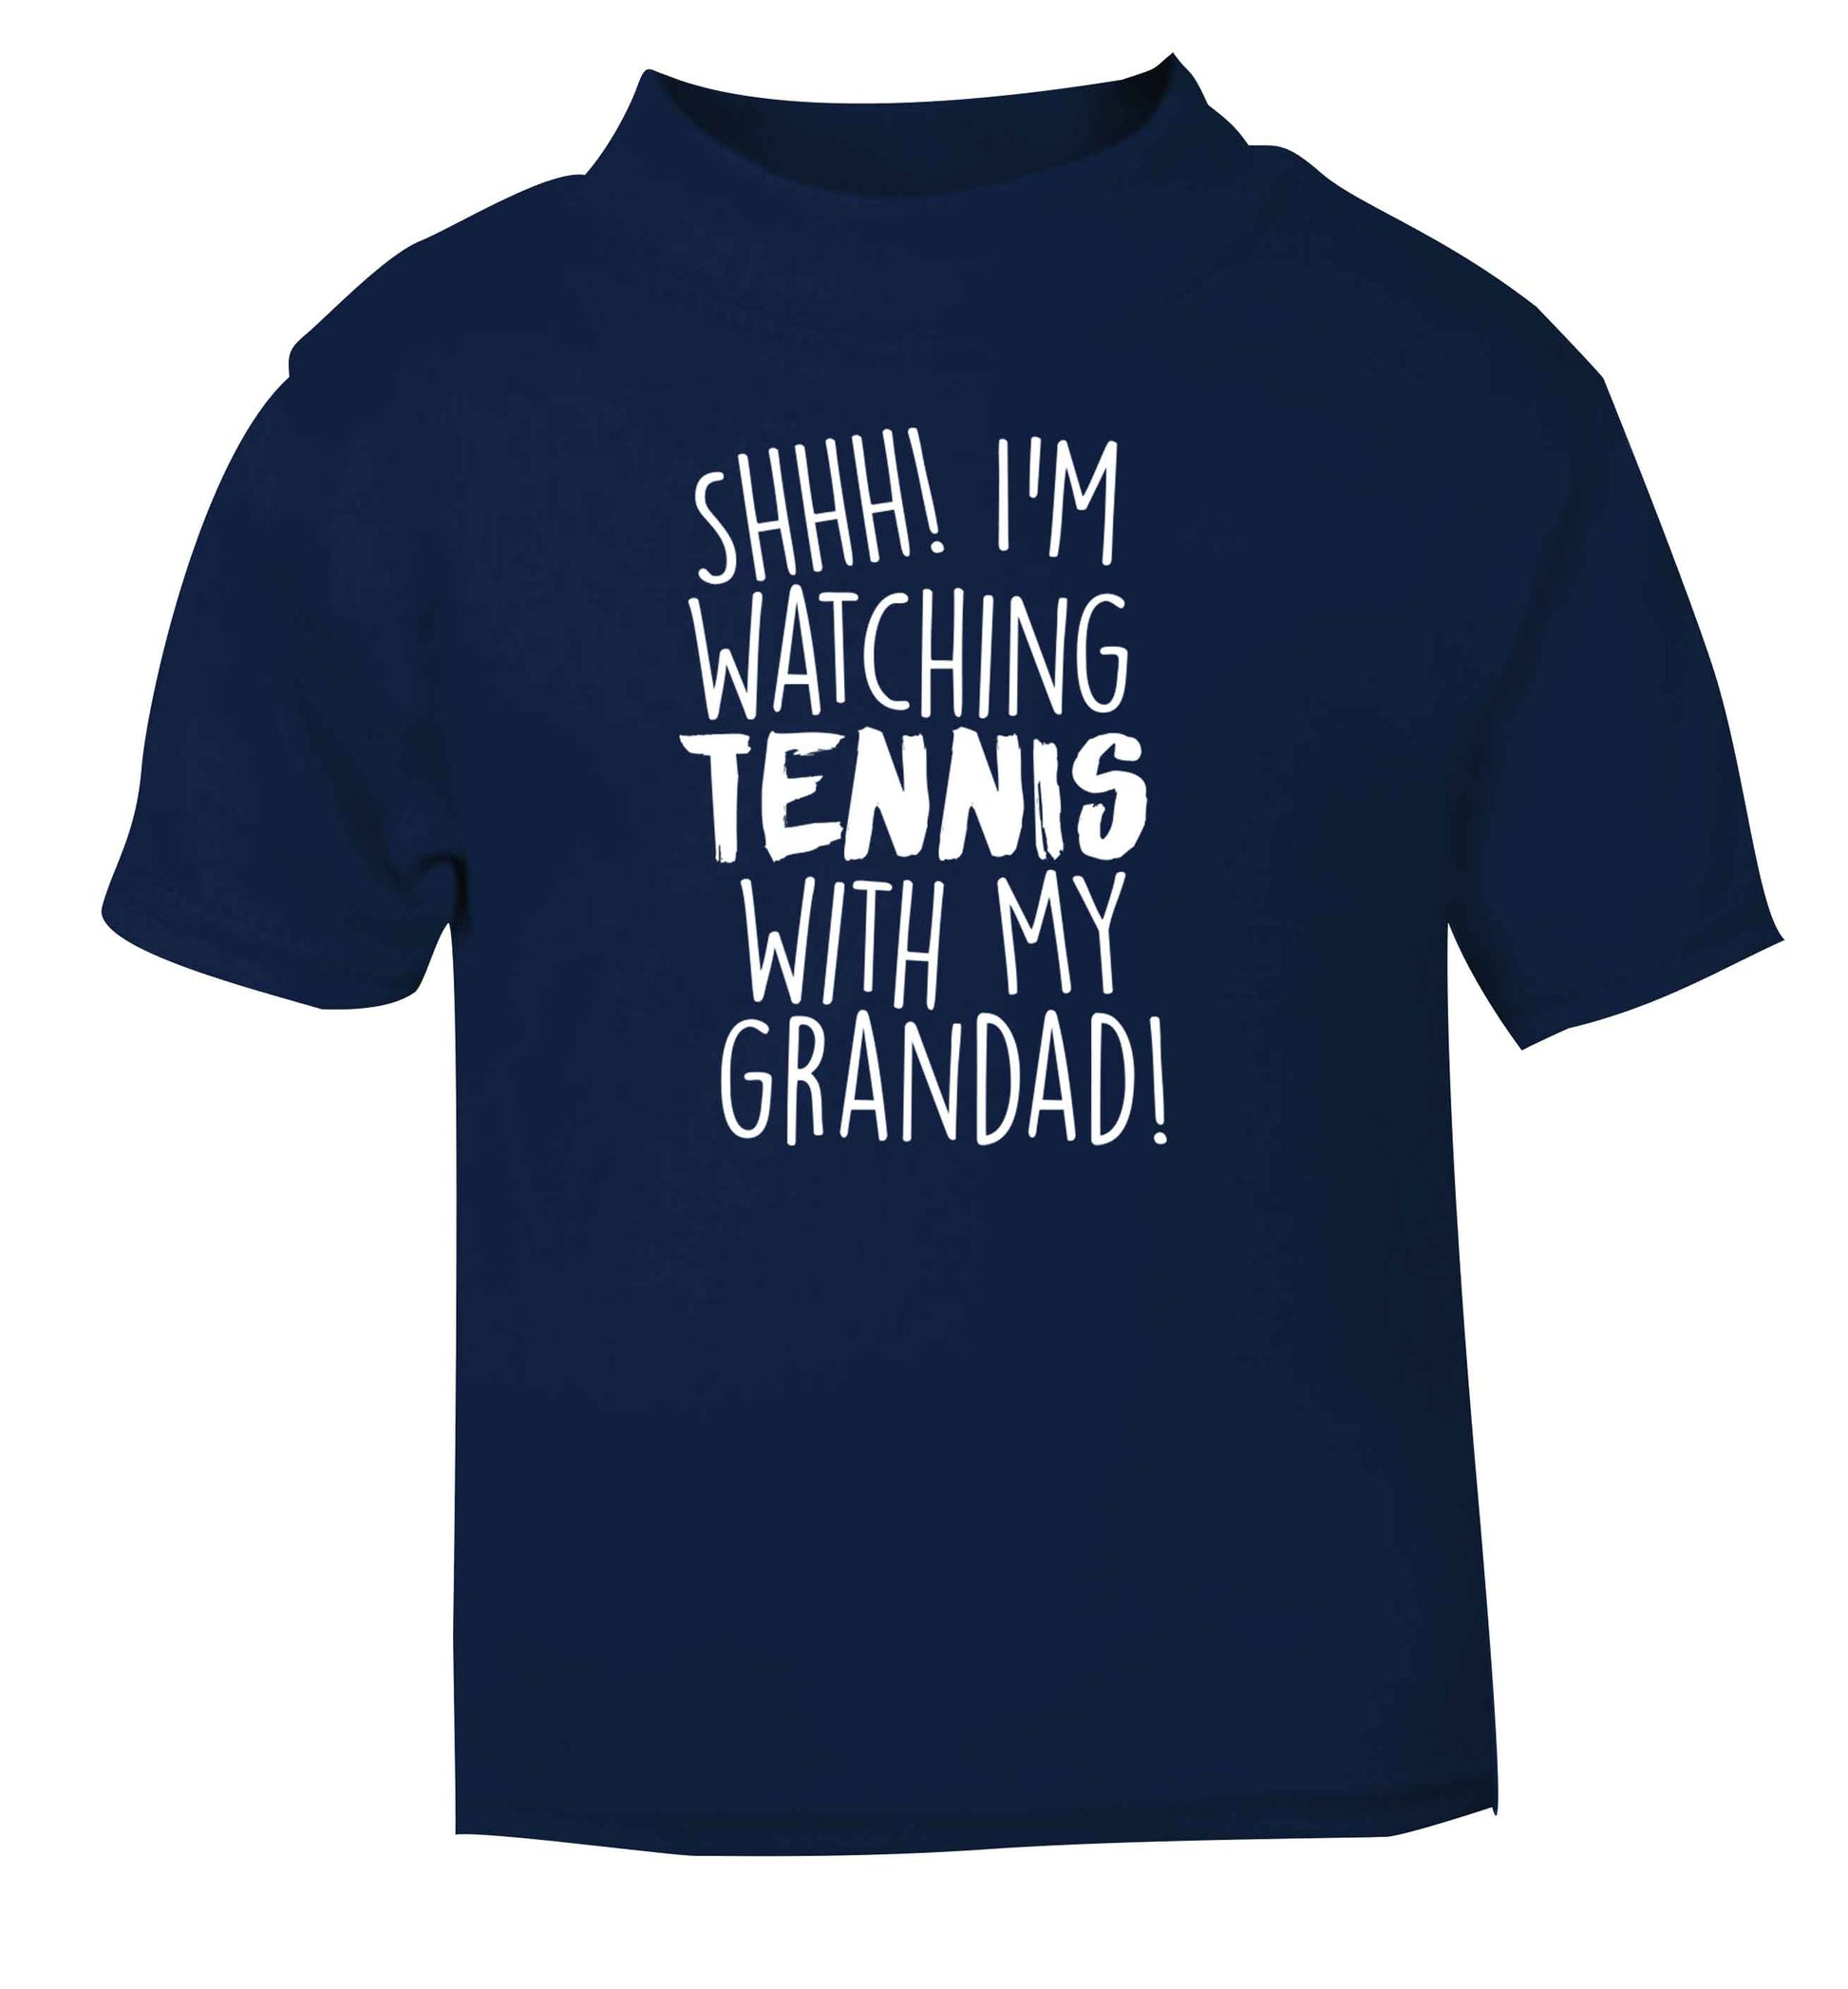 Shh! I'm watching tennis with my grandad! navy Baby Toddler Tshirt 2 Years